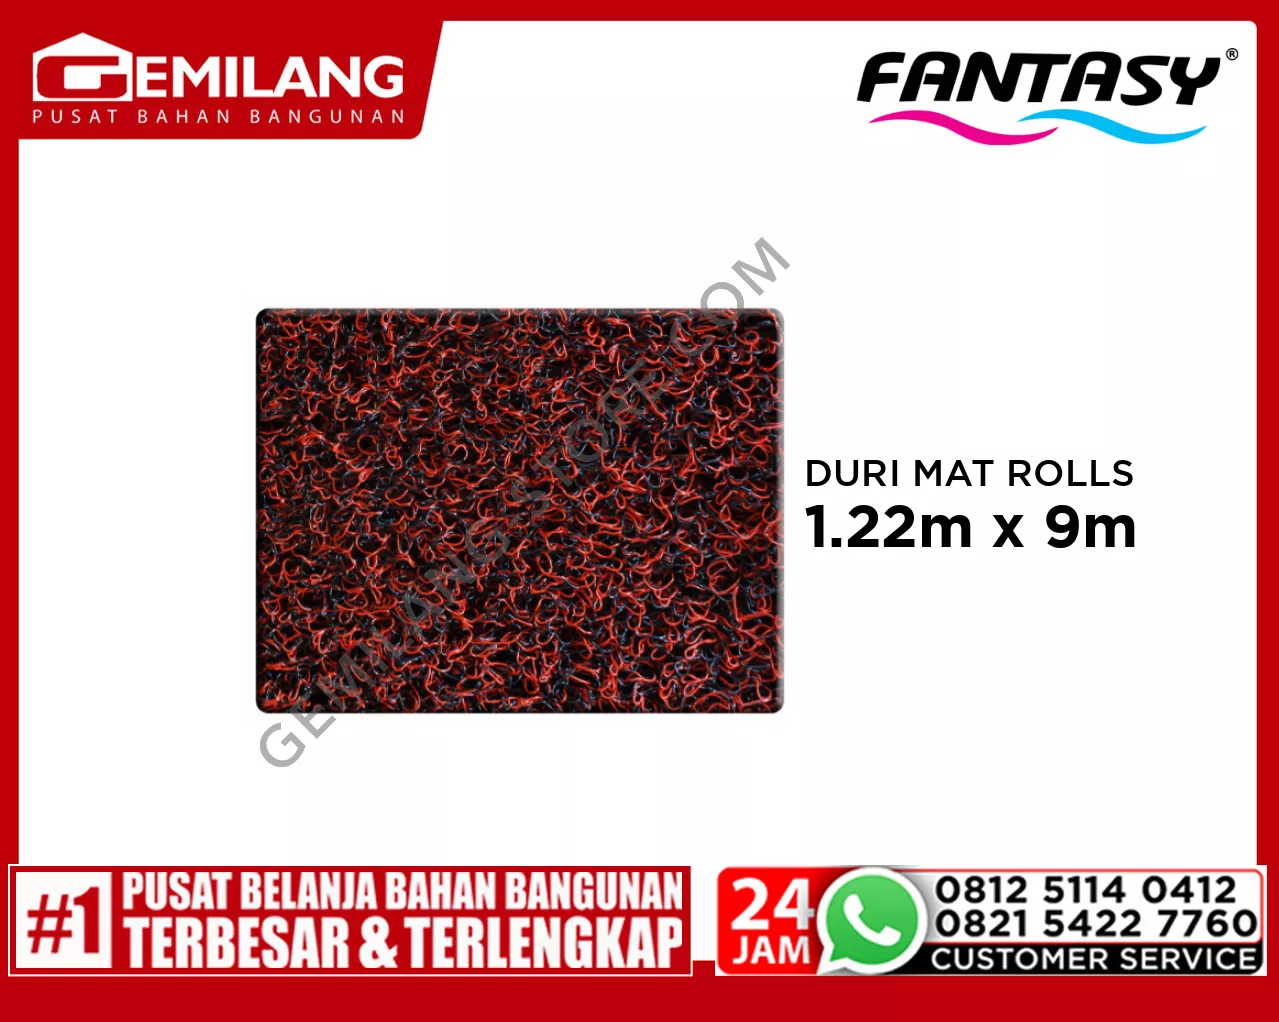 FANTASY ANTISLIP DURI MAT ROLLS RED 1.22m x 9m x 15mm/mtr